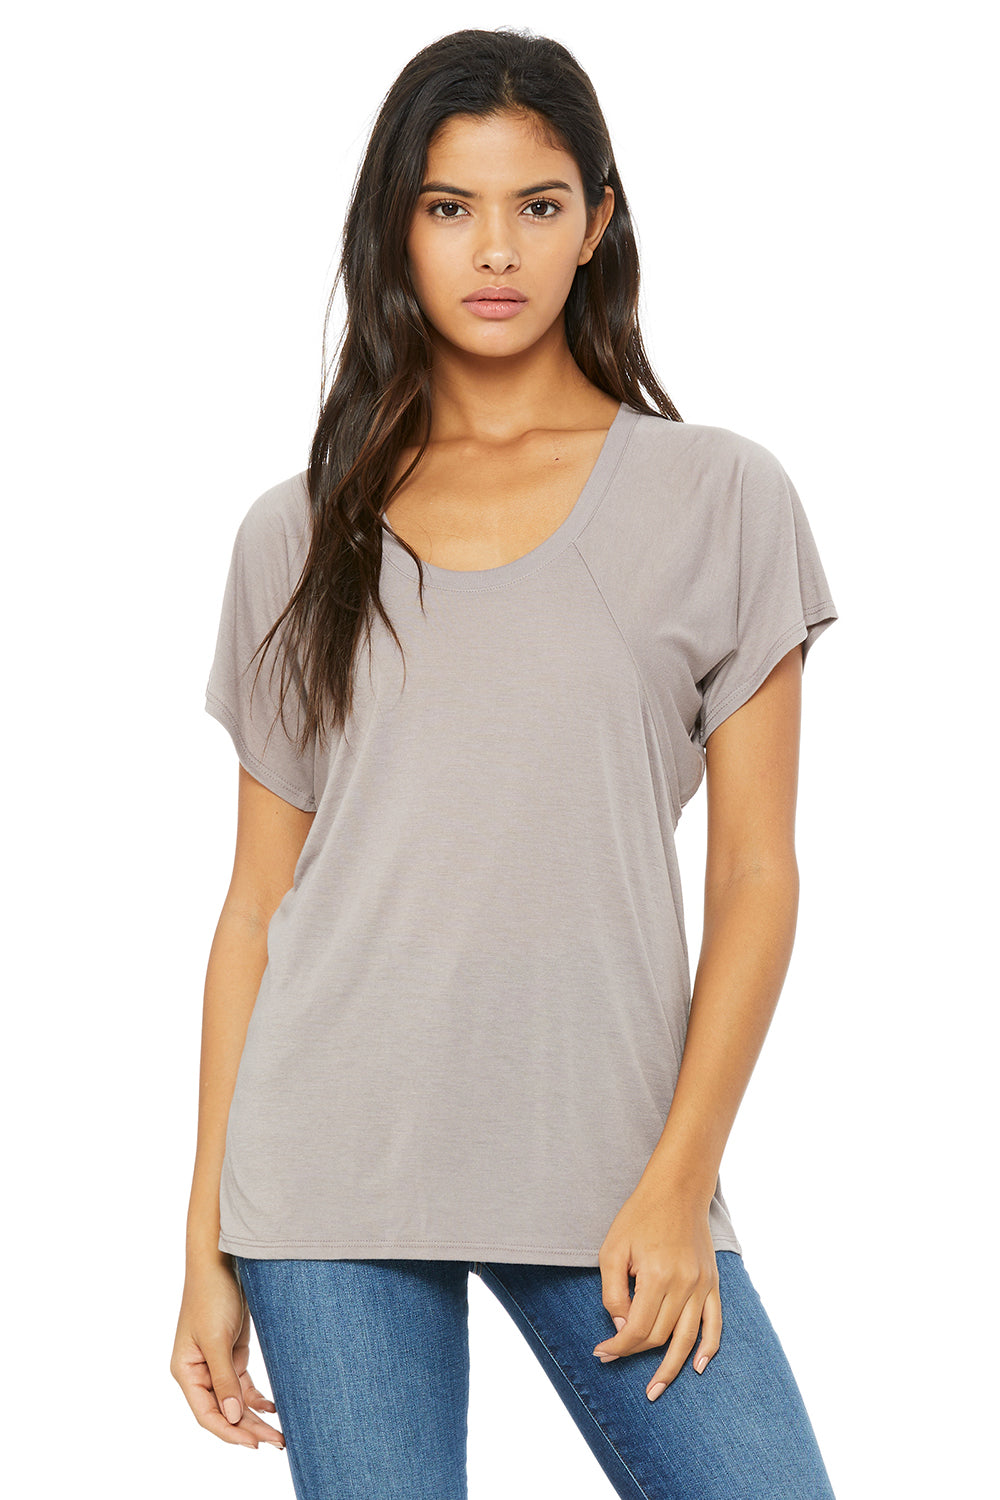 Bella + Canvas B8801 Womens Flowy Short Sleeve Scoop Neck T-Shirt Pebble Brown Front